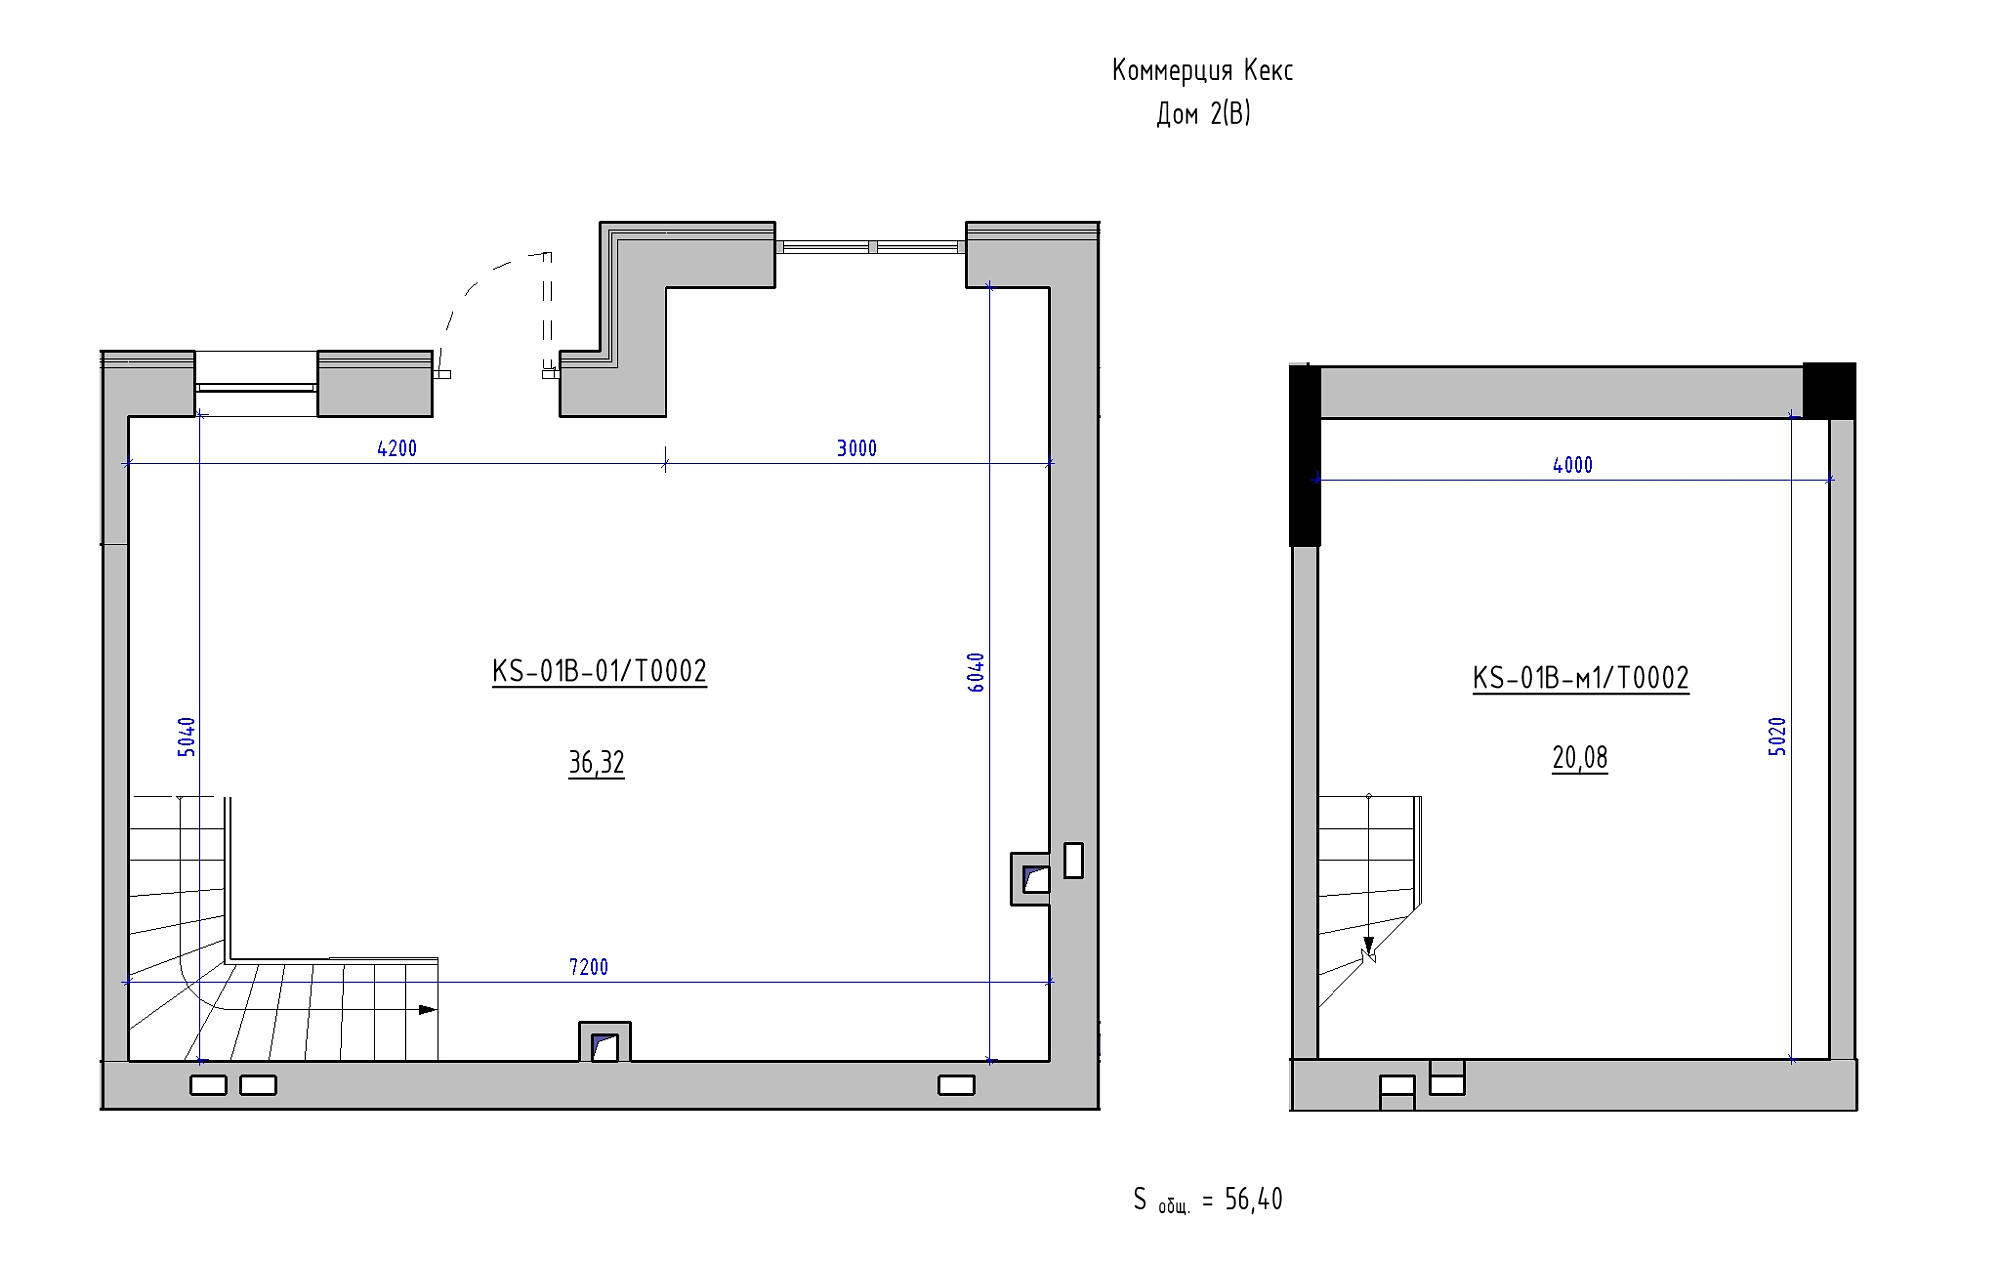 Planning Commercial premises area 56.4m2, KS-01B-01/Т002.